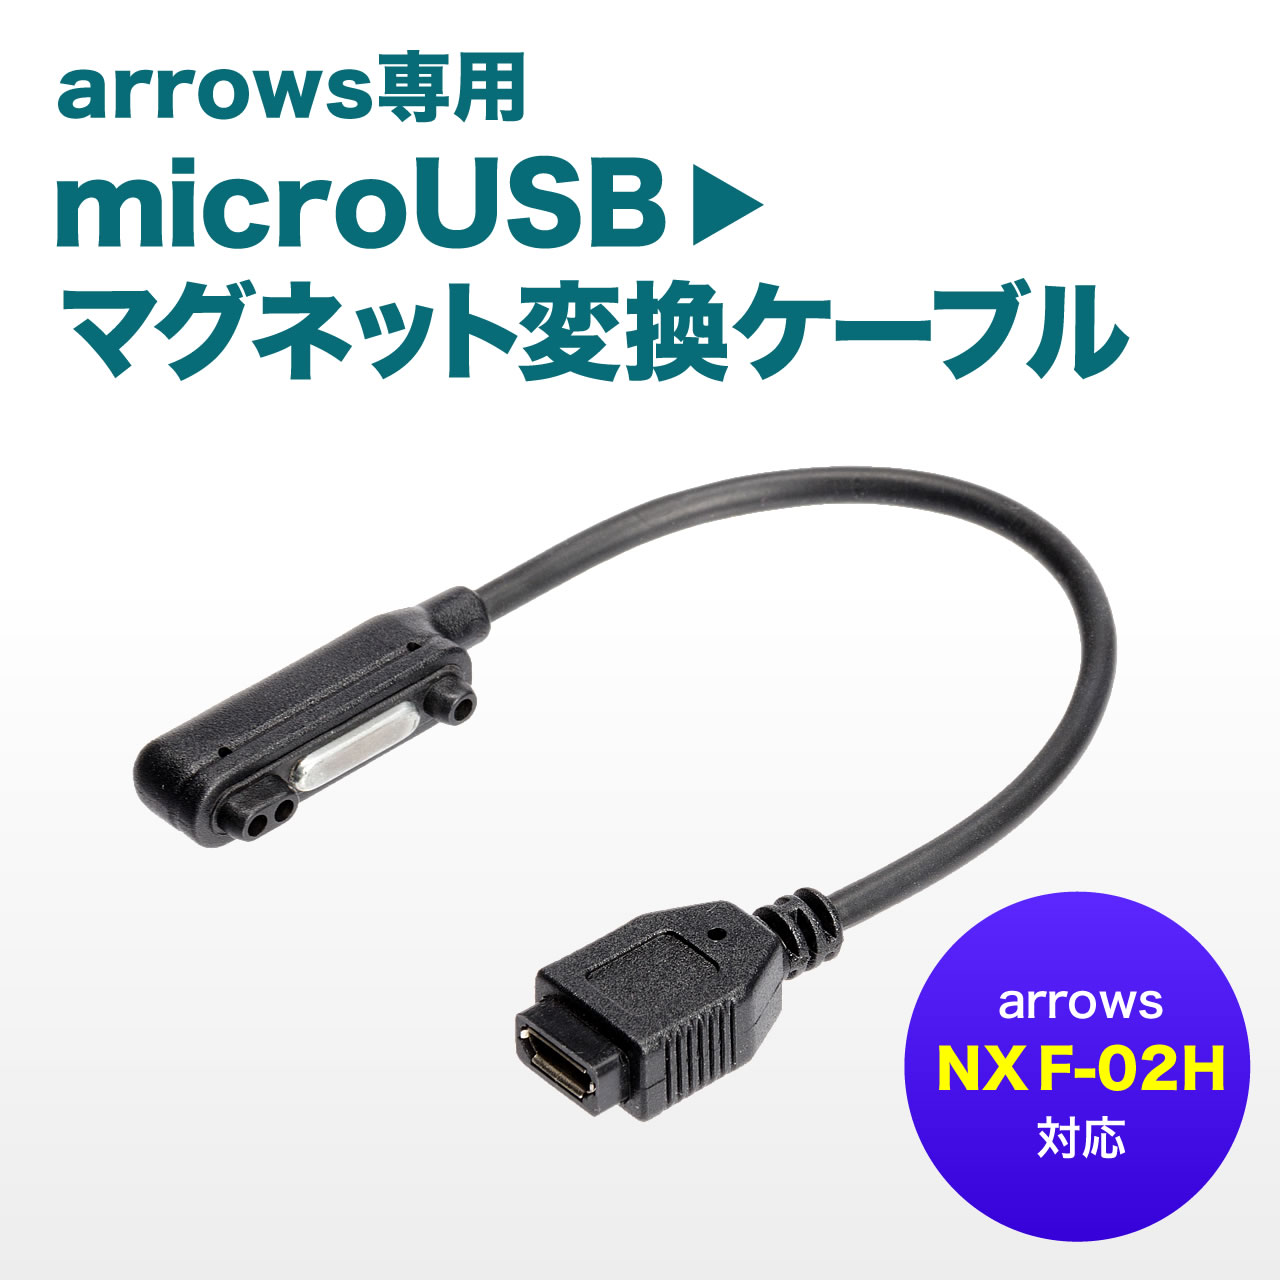 arrowsp}Olbgϊ[dP[u(arrows NX F-02HpE}CNUSB[dE}OlbgϊA_v^EP[u10cmEubNj 500-USB043